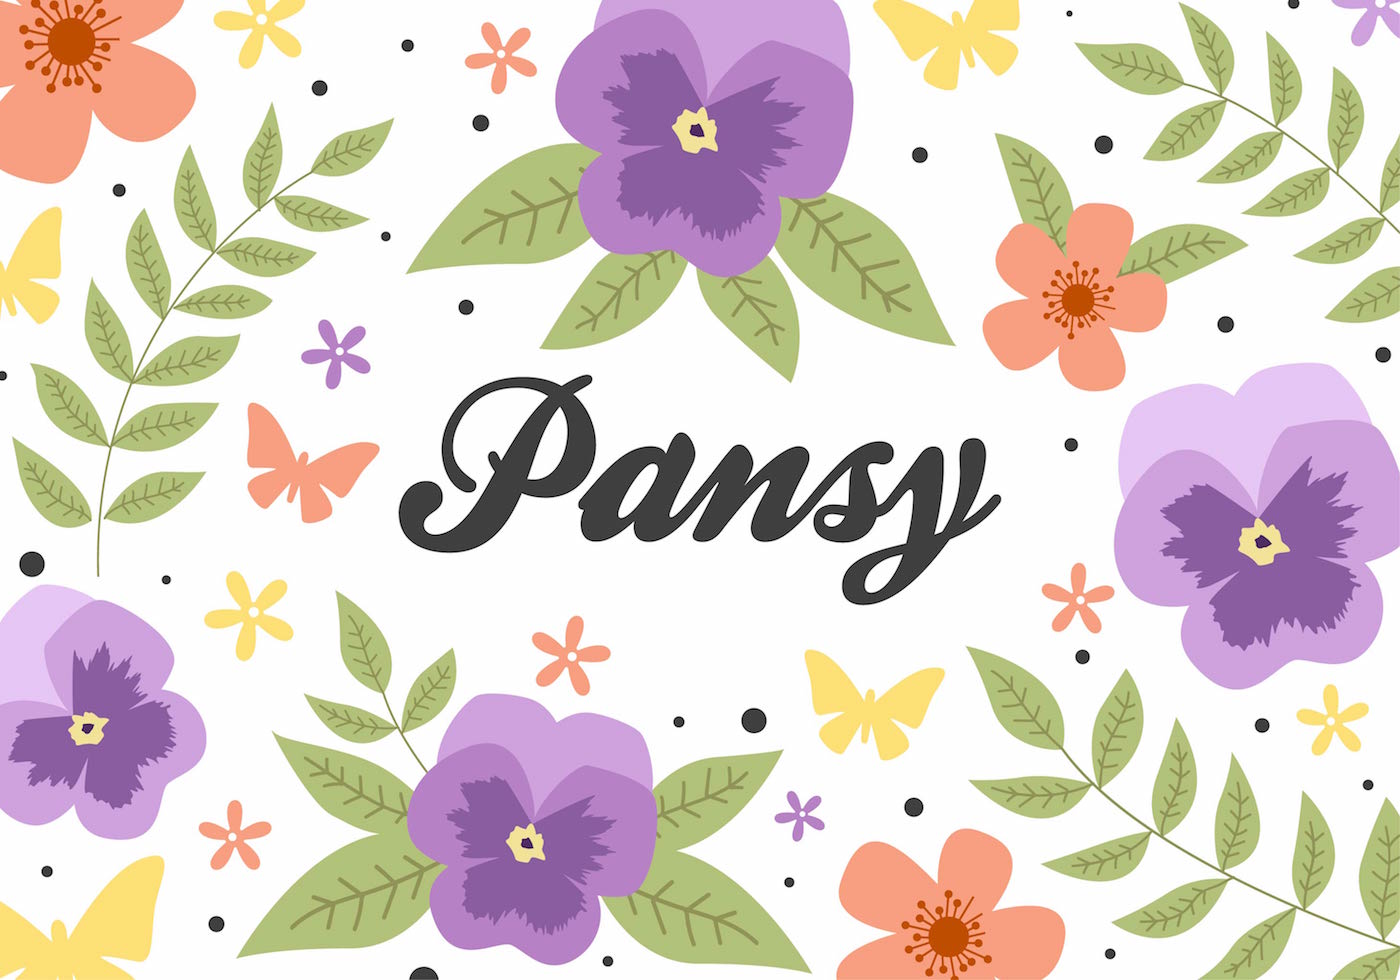 Download Flower Pansy Background Vector 122138 - Download Free Vectors, Clipart Graphics & Vector Art